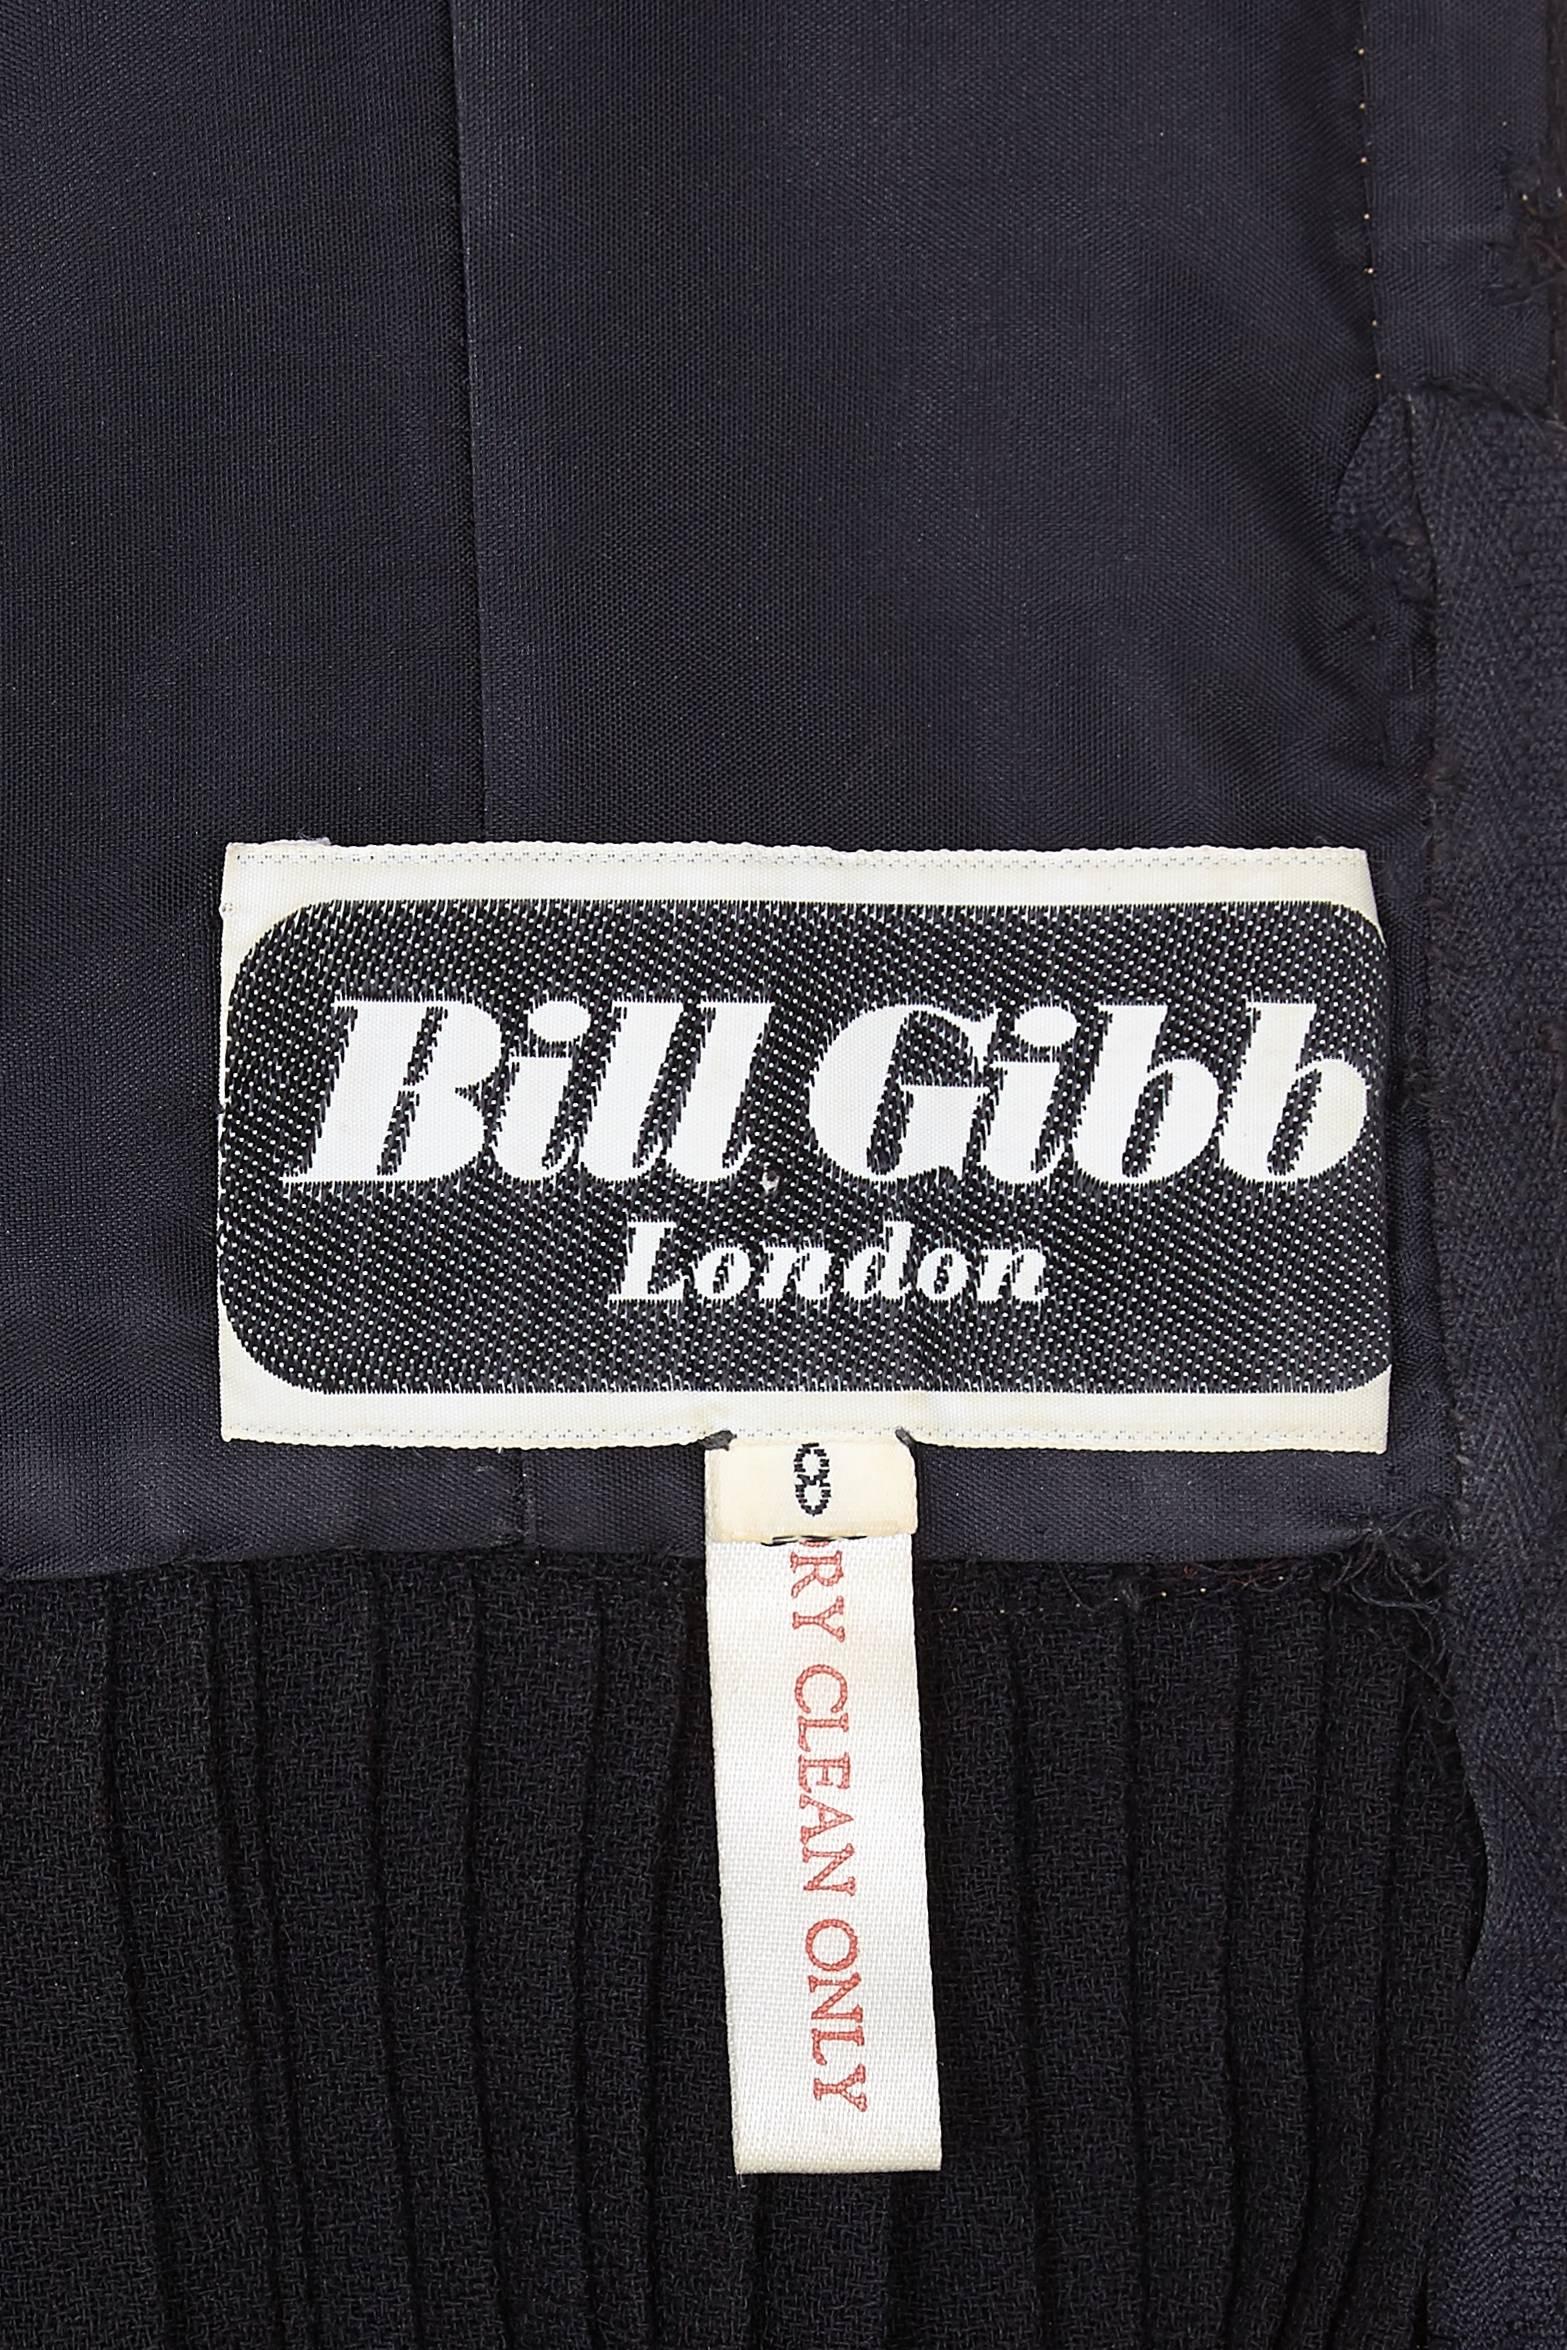 Rare Early Bill Gibb 1970s Renaissance Style Black Pleated Dress 1